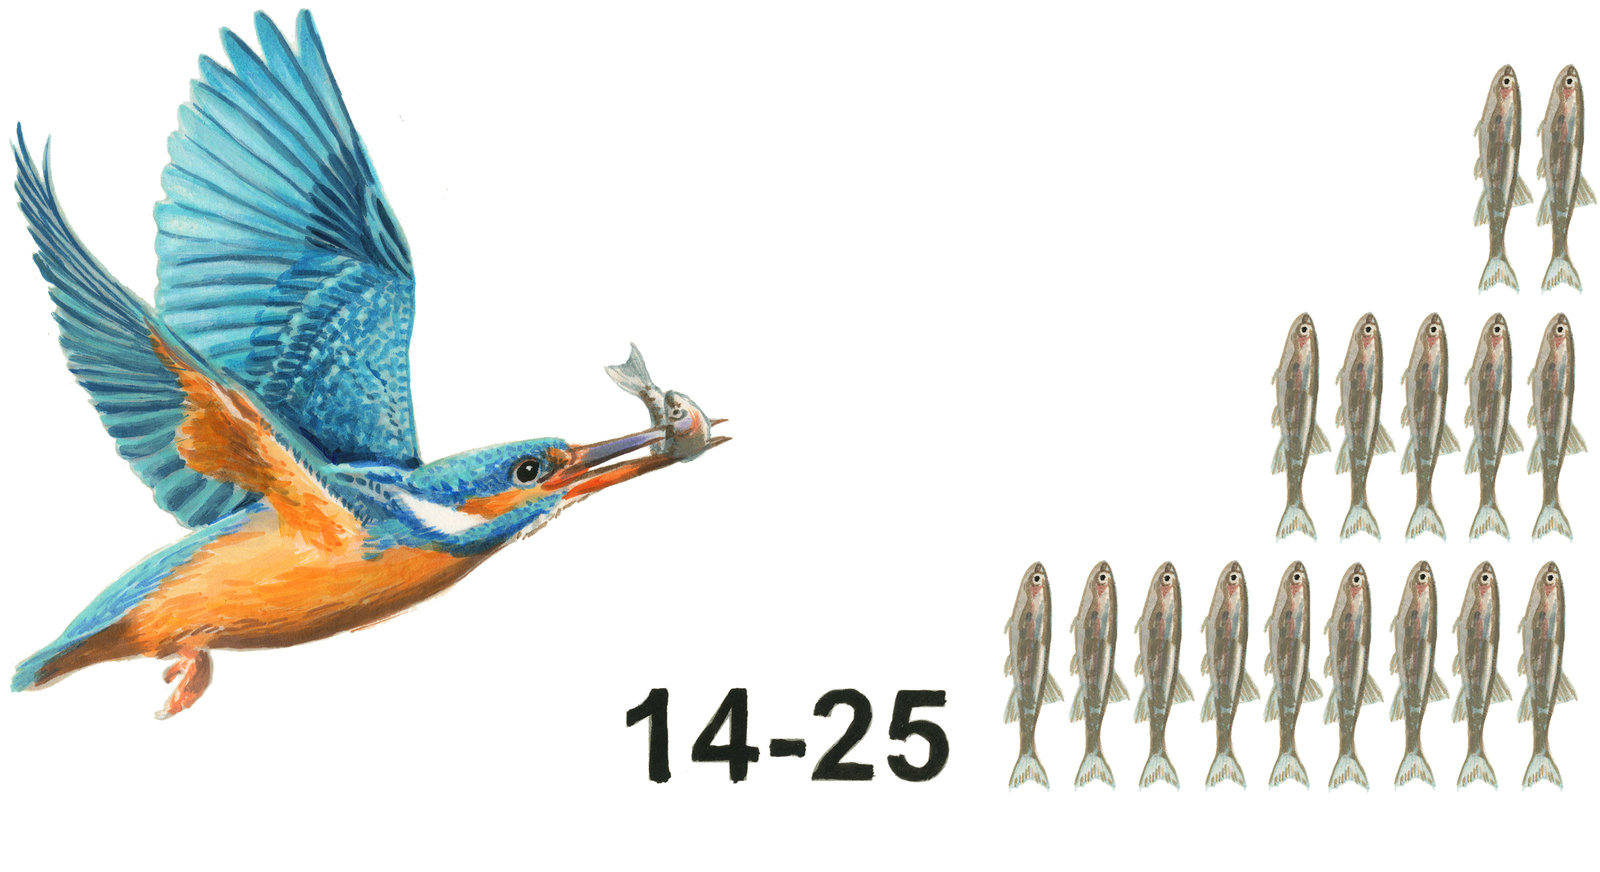 oculus-illustration-infografik-gewaesser-flora-fauna-eisvogel